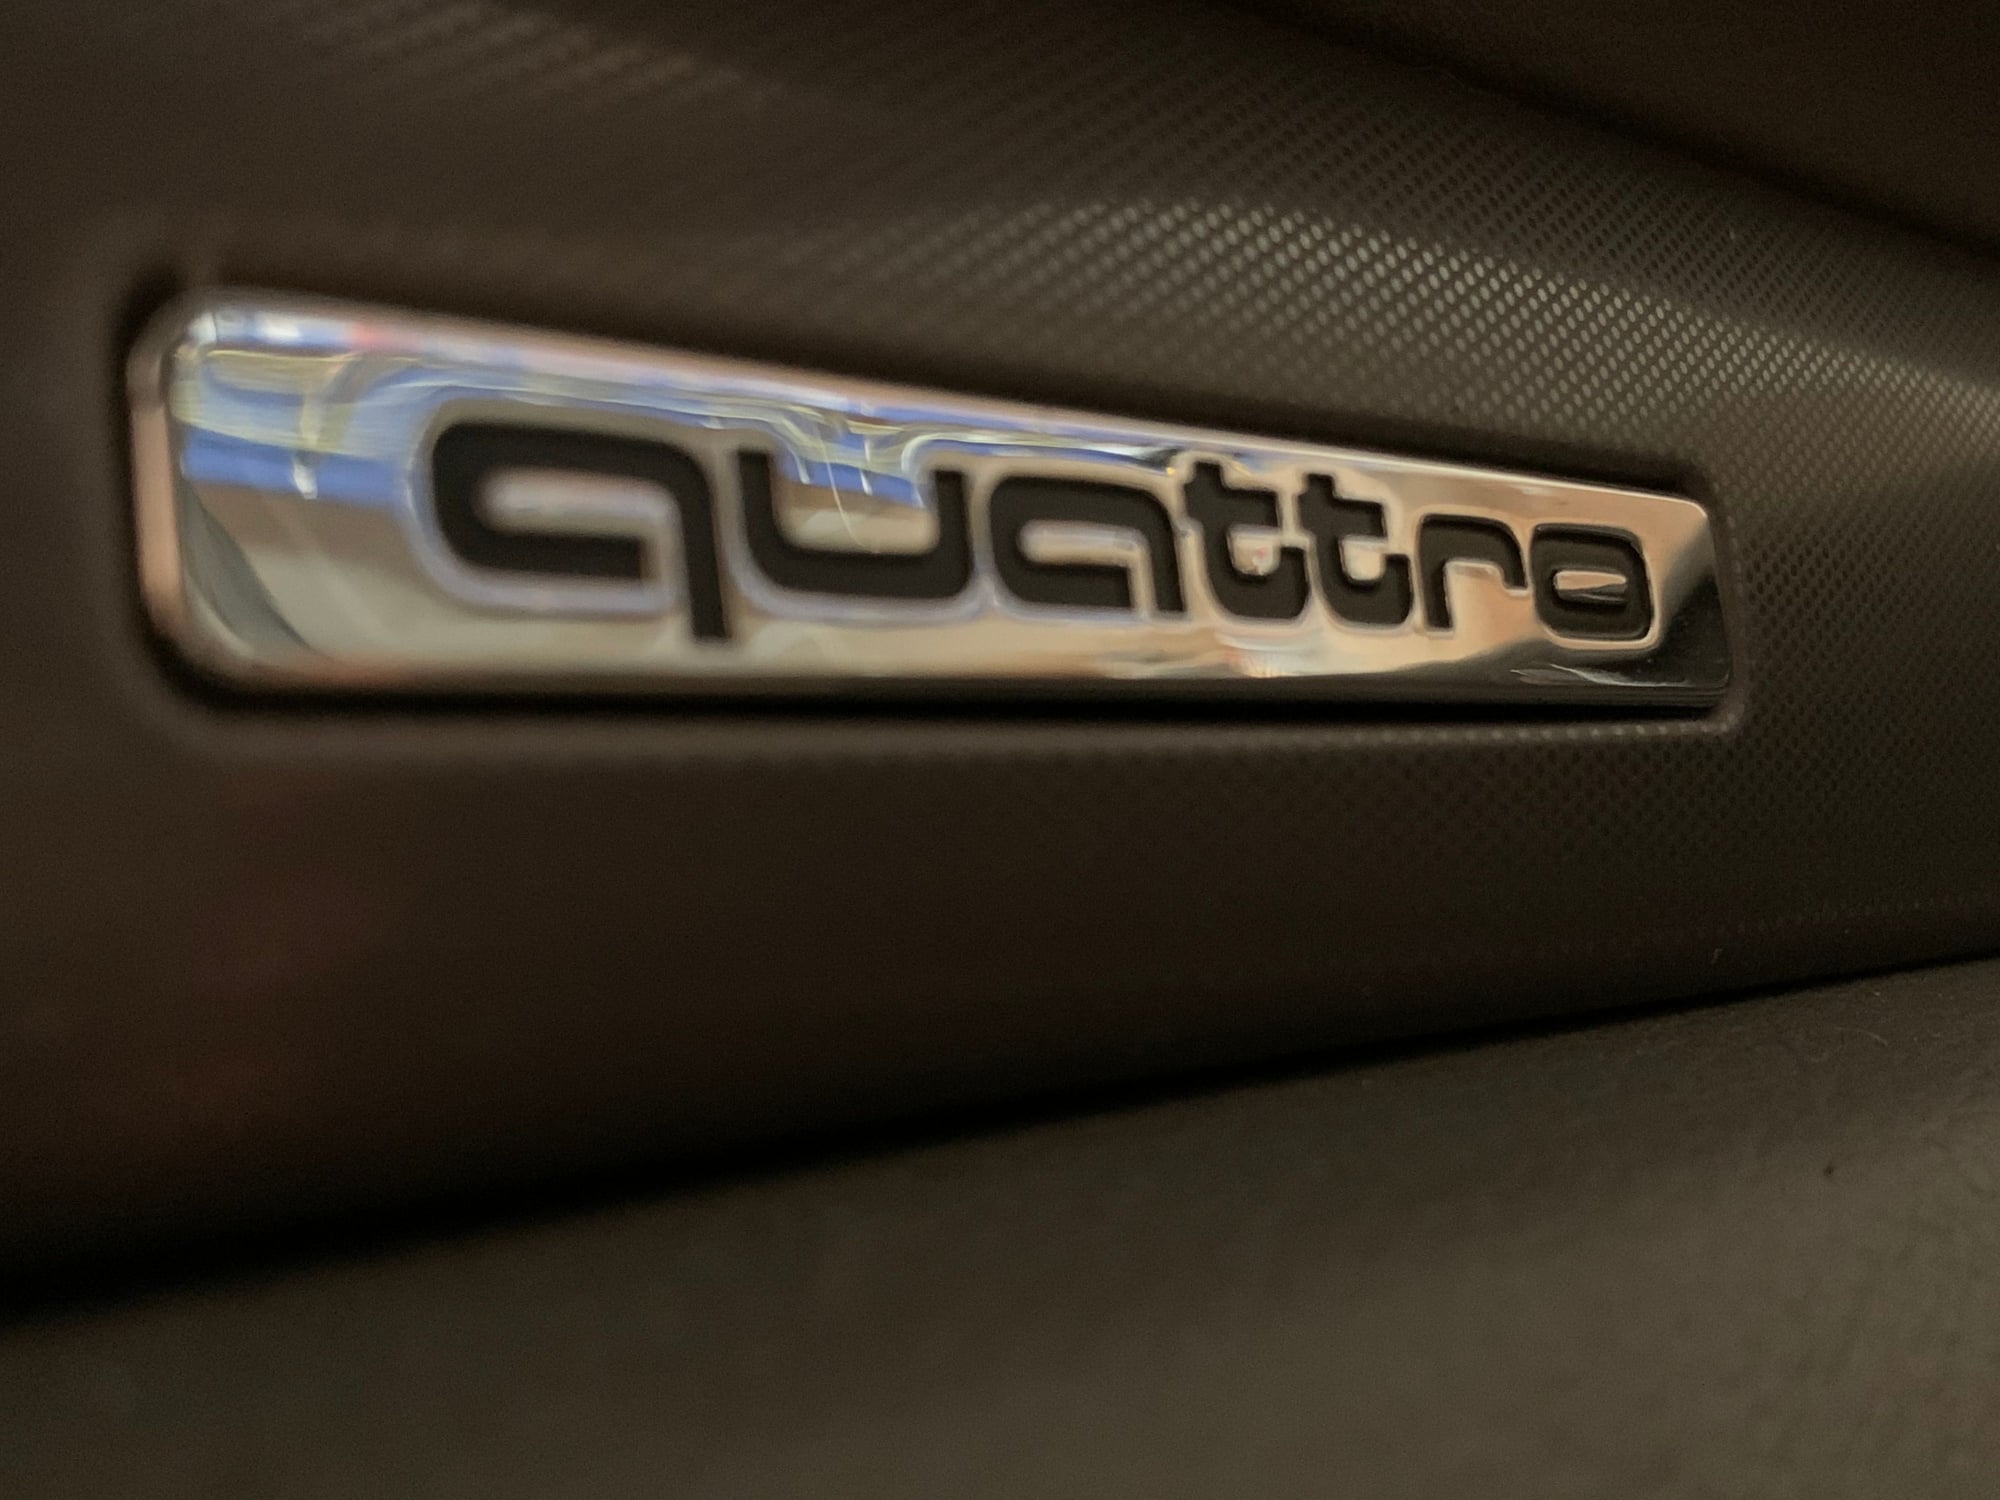 1999 Audi A4 Quattro - 1-Owner B5 A4 1.8T Quattro 99k miles!! - Used - VIN WAUCB28D9XA252800 - 99,000 Miles - 4 cyl - AWD - Manual - Sedan - Silver - Sf Bay Area, CA 94025, United States